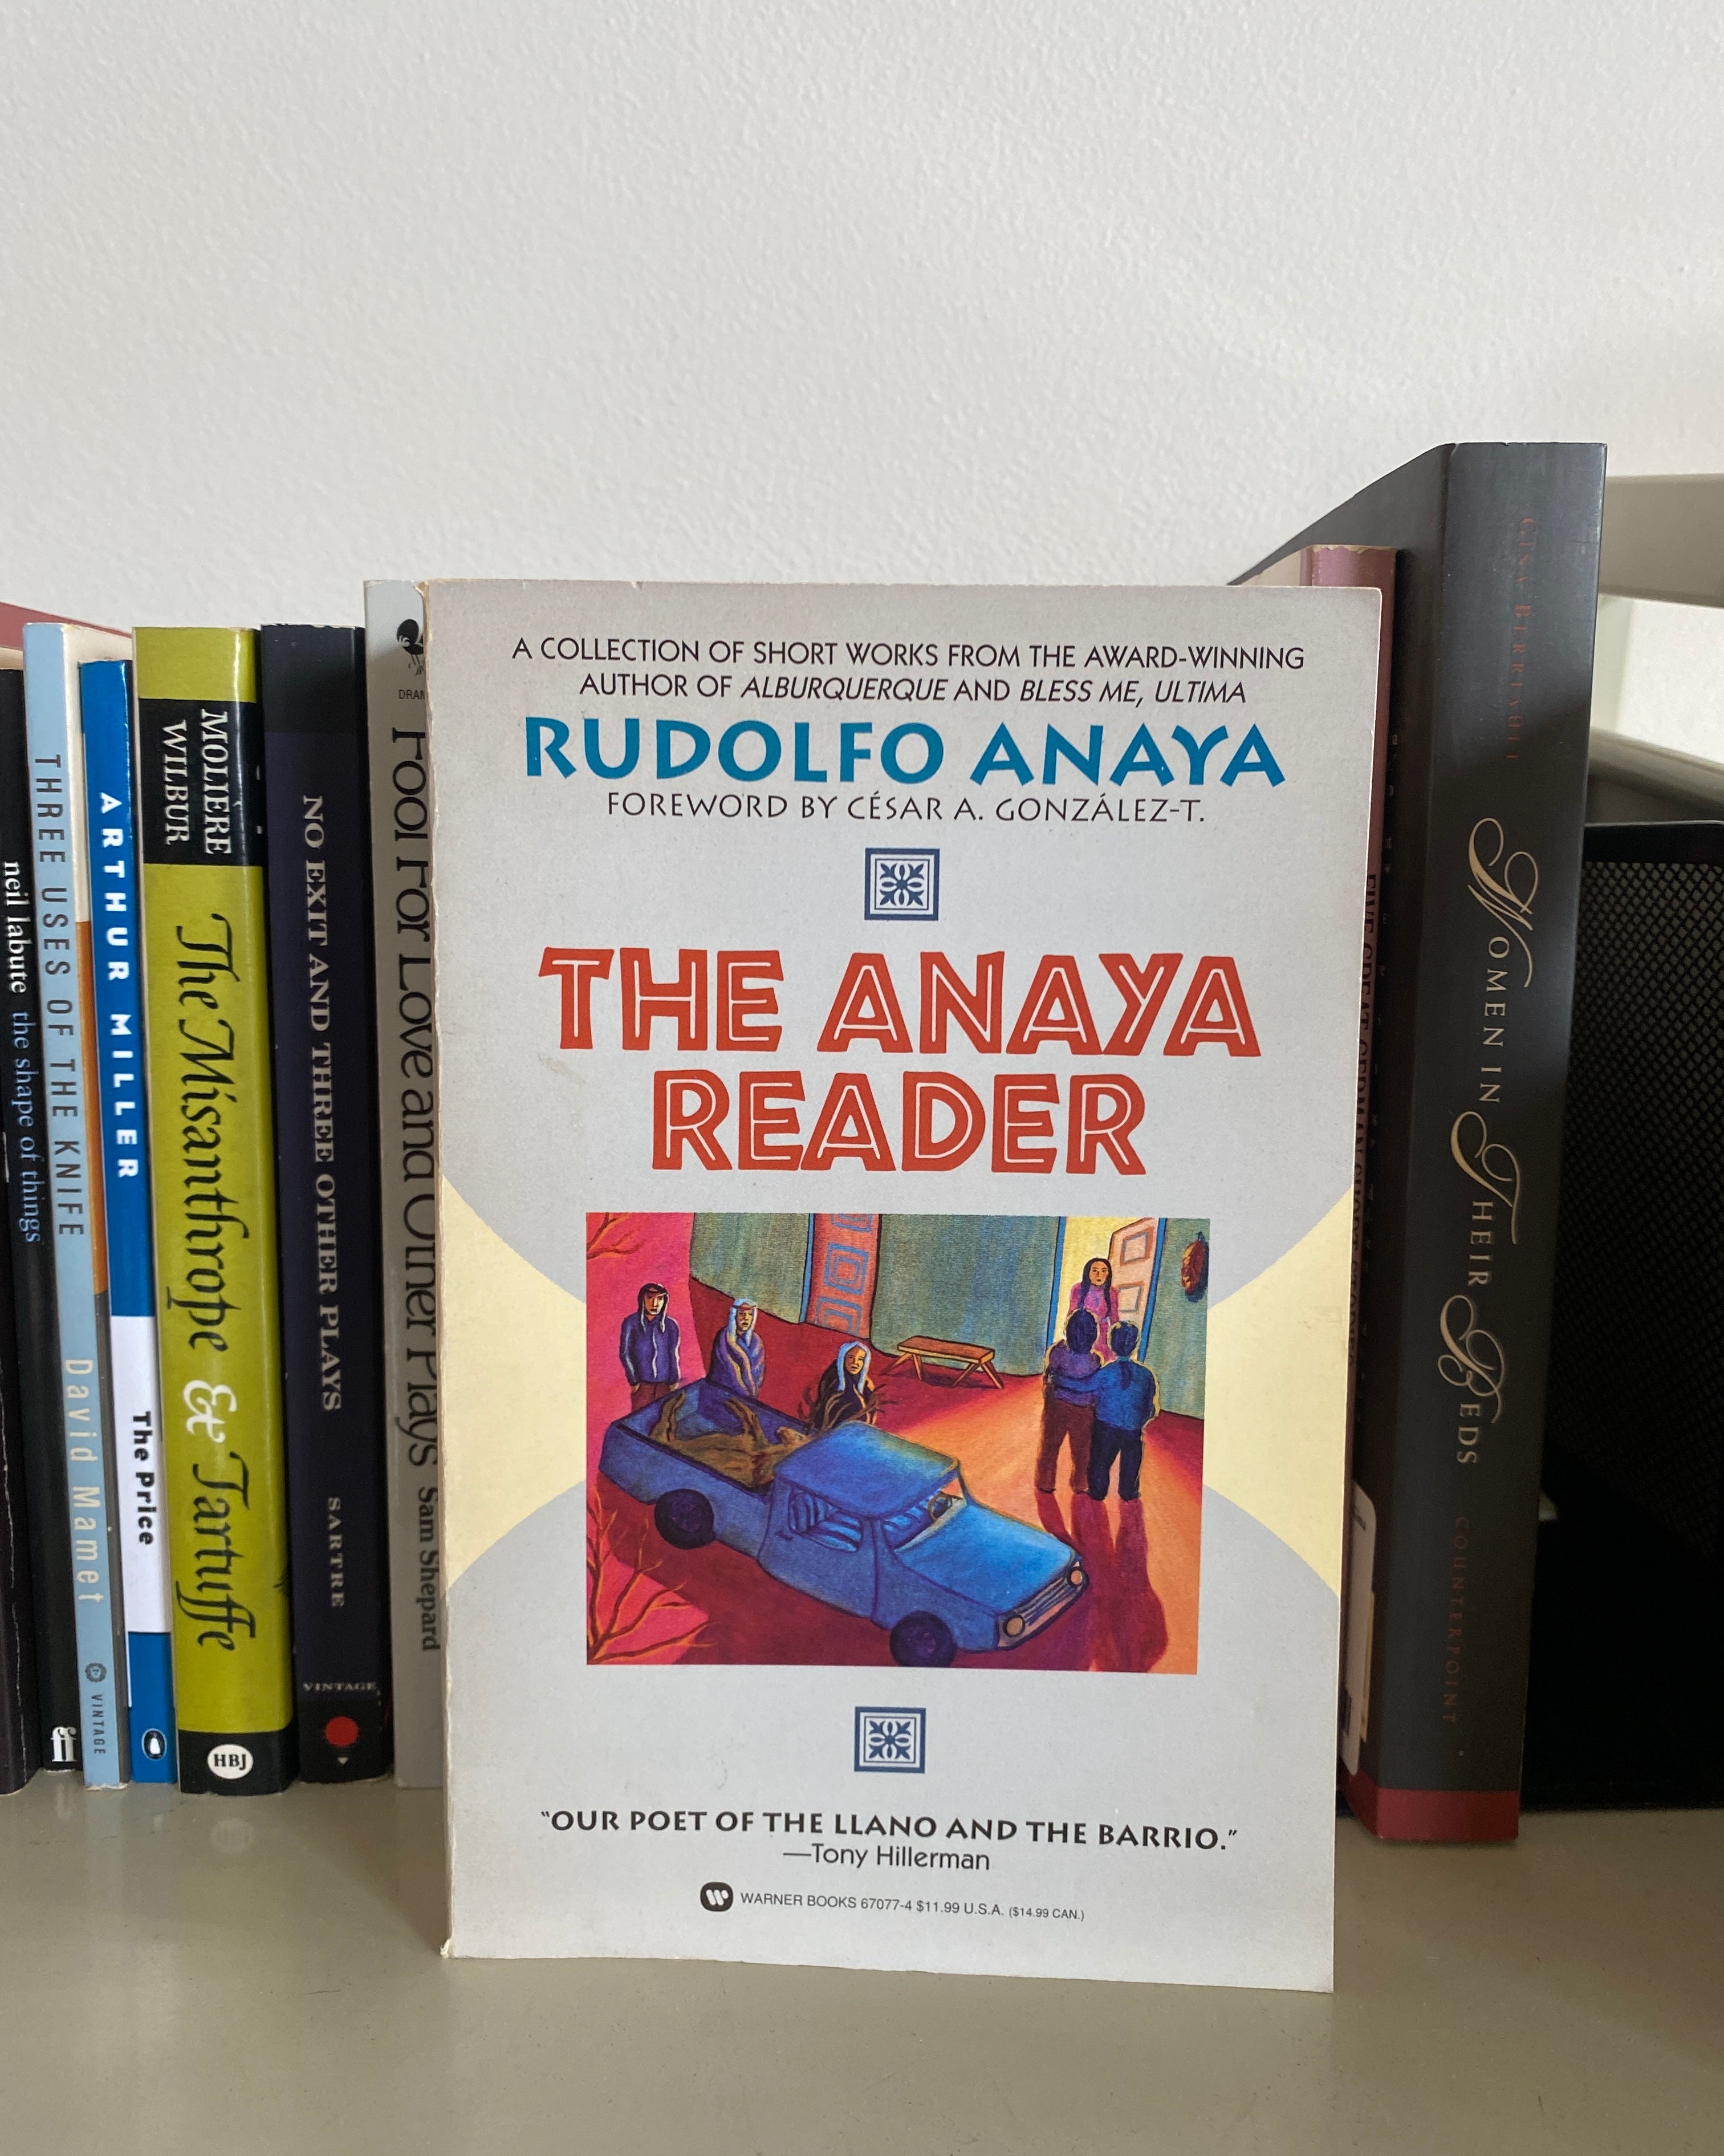 The Anaya Reader by Rudolfo Anaya (1st Printing Warner Trade)